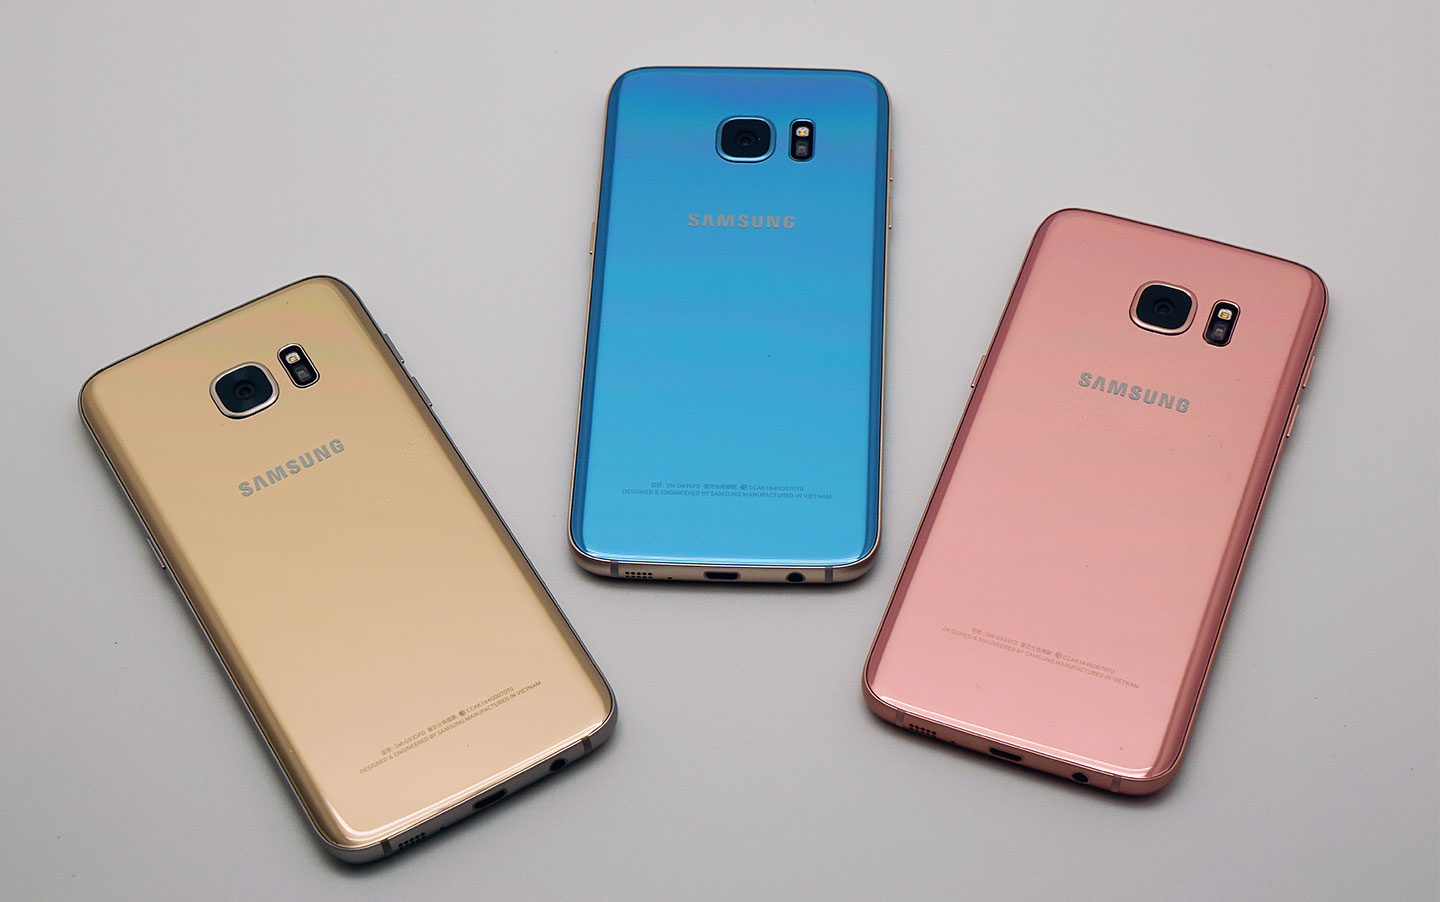 Galaxy S7 系列在相機功能上的進展可以用「大躍進」來形容，當時甚至以「手機界的單眼」自居。